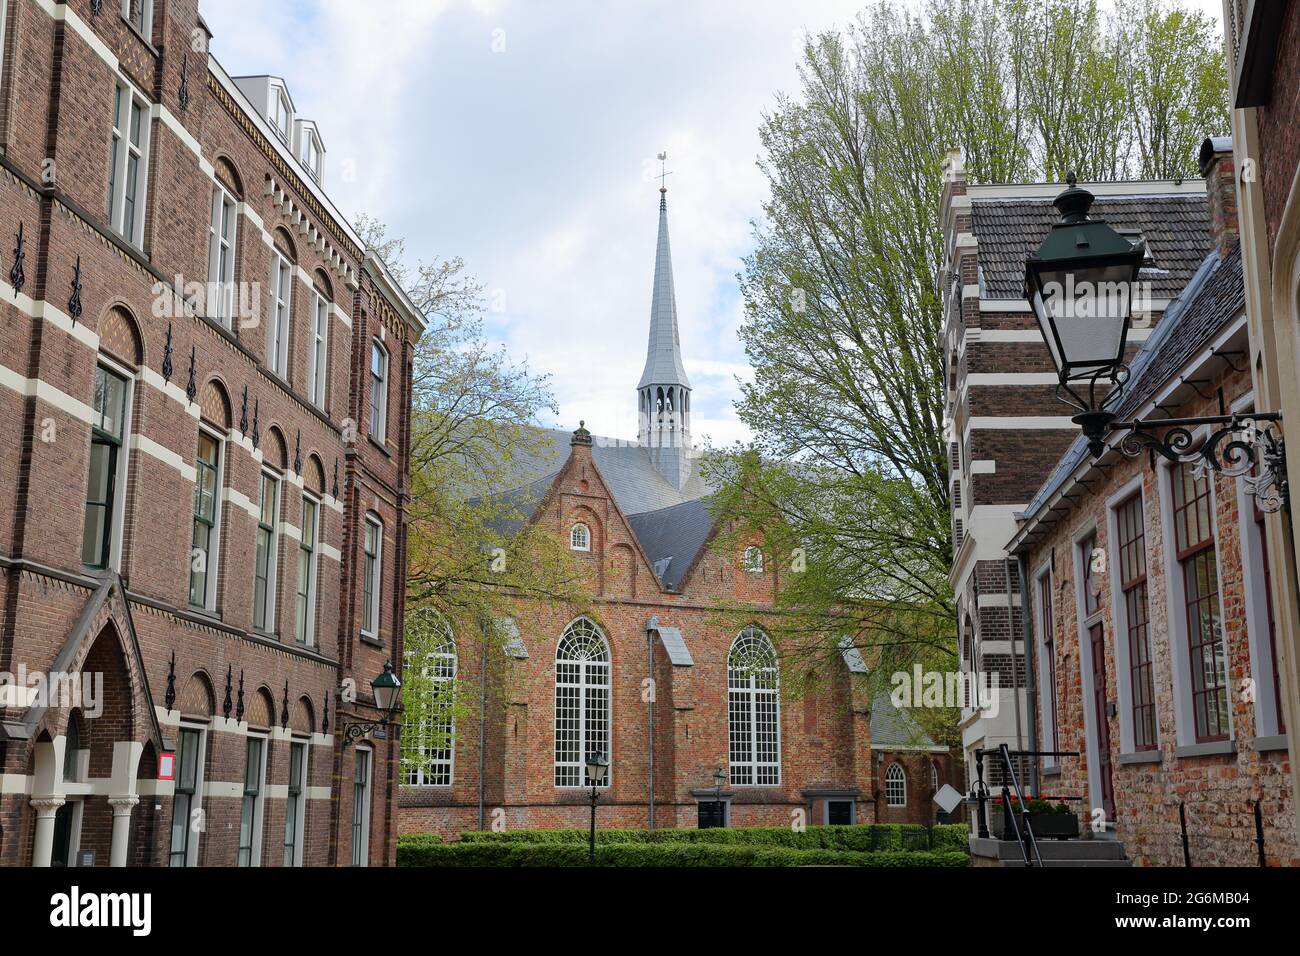 Jacobijnerkerk church viewed from Grote Kerkstraat street in Leeuwarden, Friesland, Netherlands, with historic buildings in the foreground Stock Photo